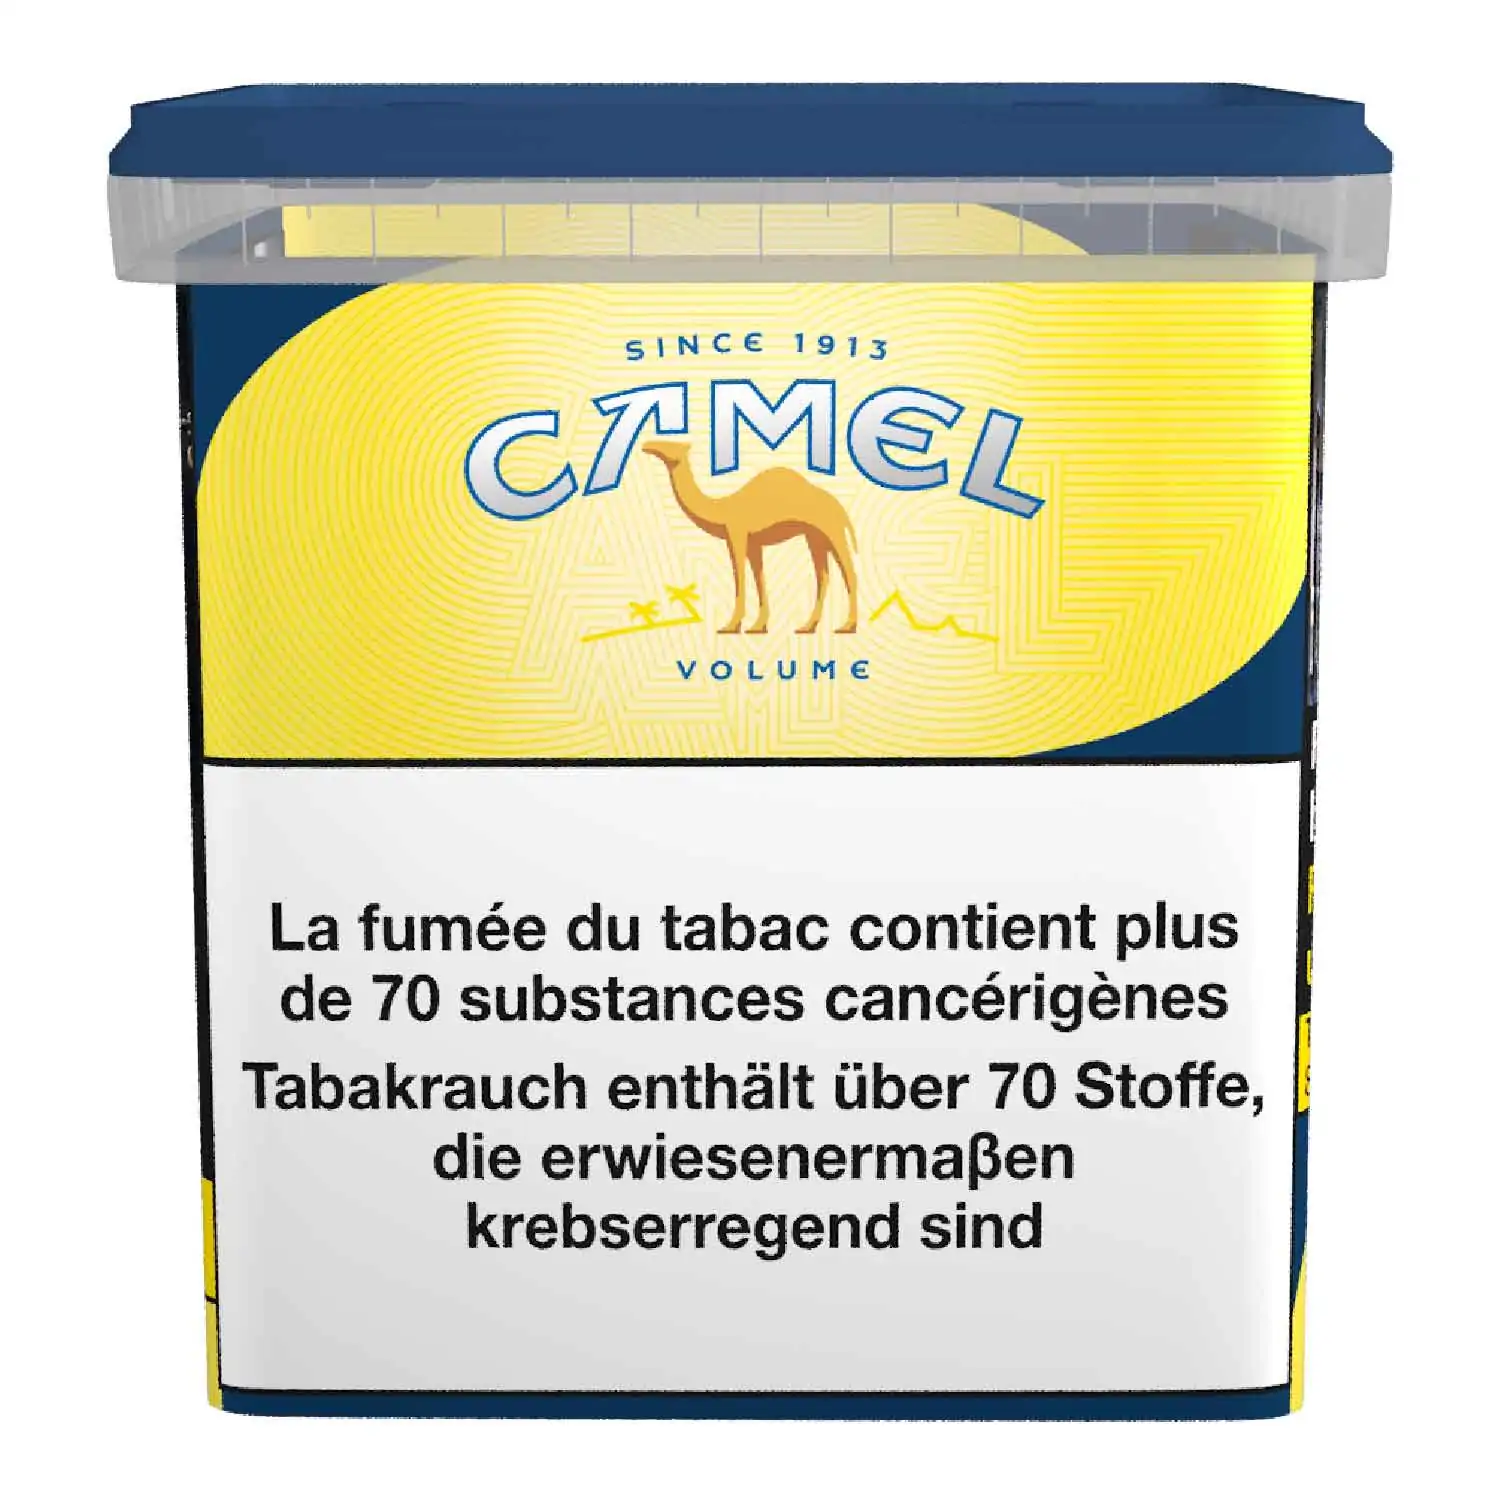 Camel volume jaune 250g - Buy at Real Tobacco